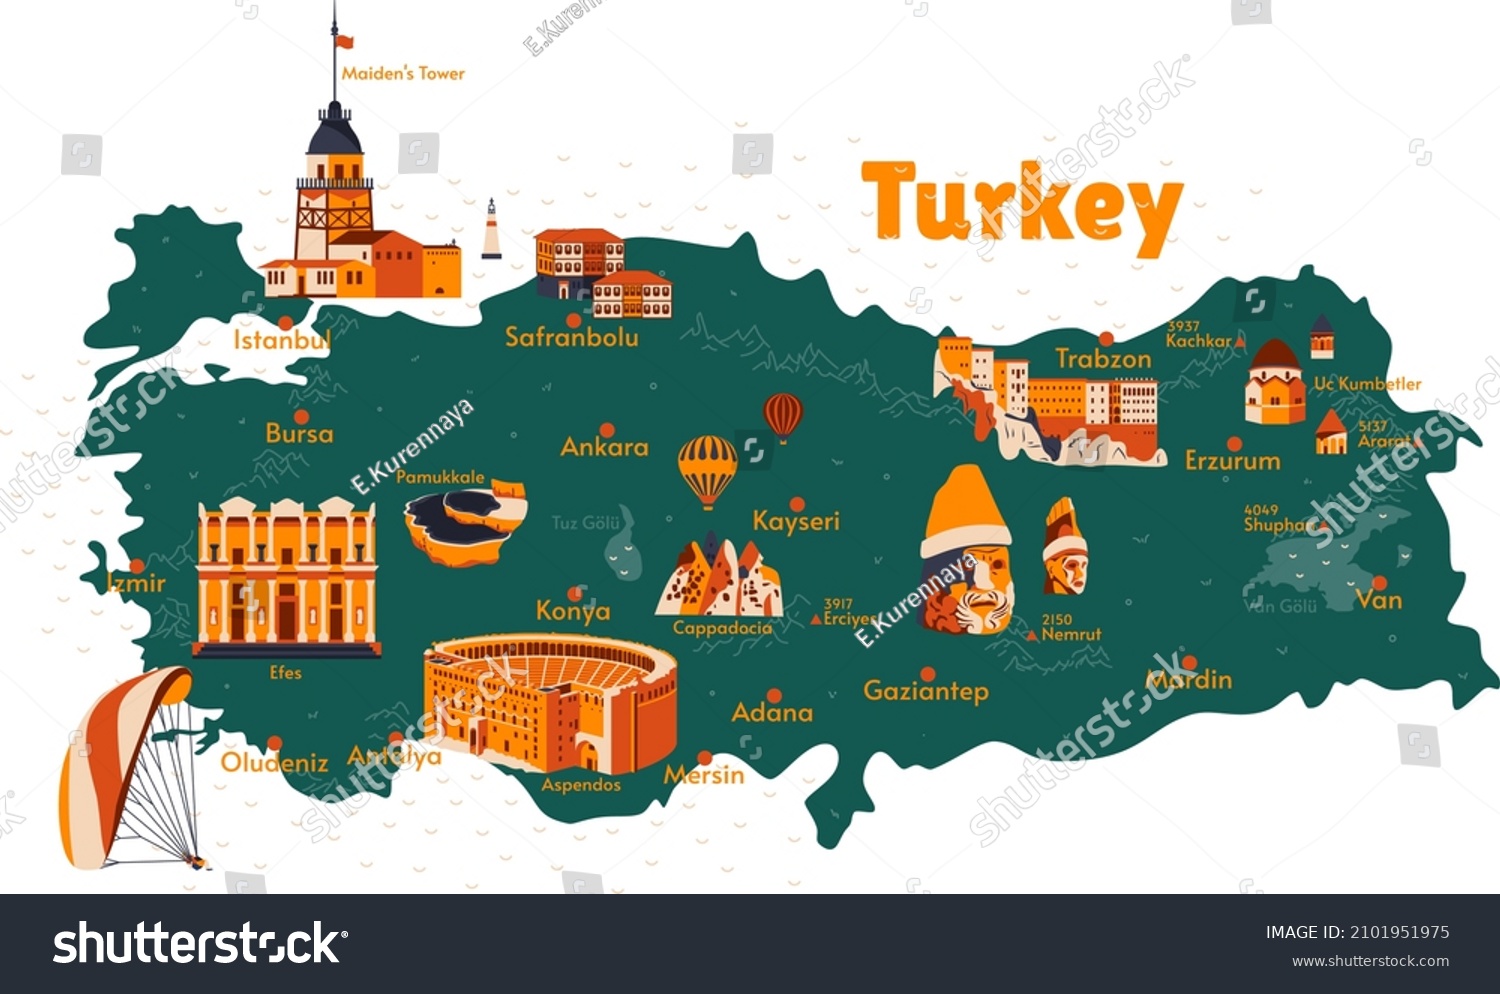 Vector map of Turkey. Sights. Historical places. Tourism. Cities. Guide. Ephesus, Cappadocia, Pamukkale, Mount Nemrut, Ararat, Sumela Monastery, Aspendos, Maiden's Tower, Istanbul, Oludeniz. #2101951975